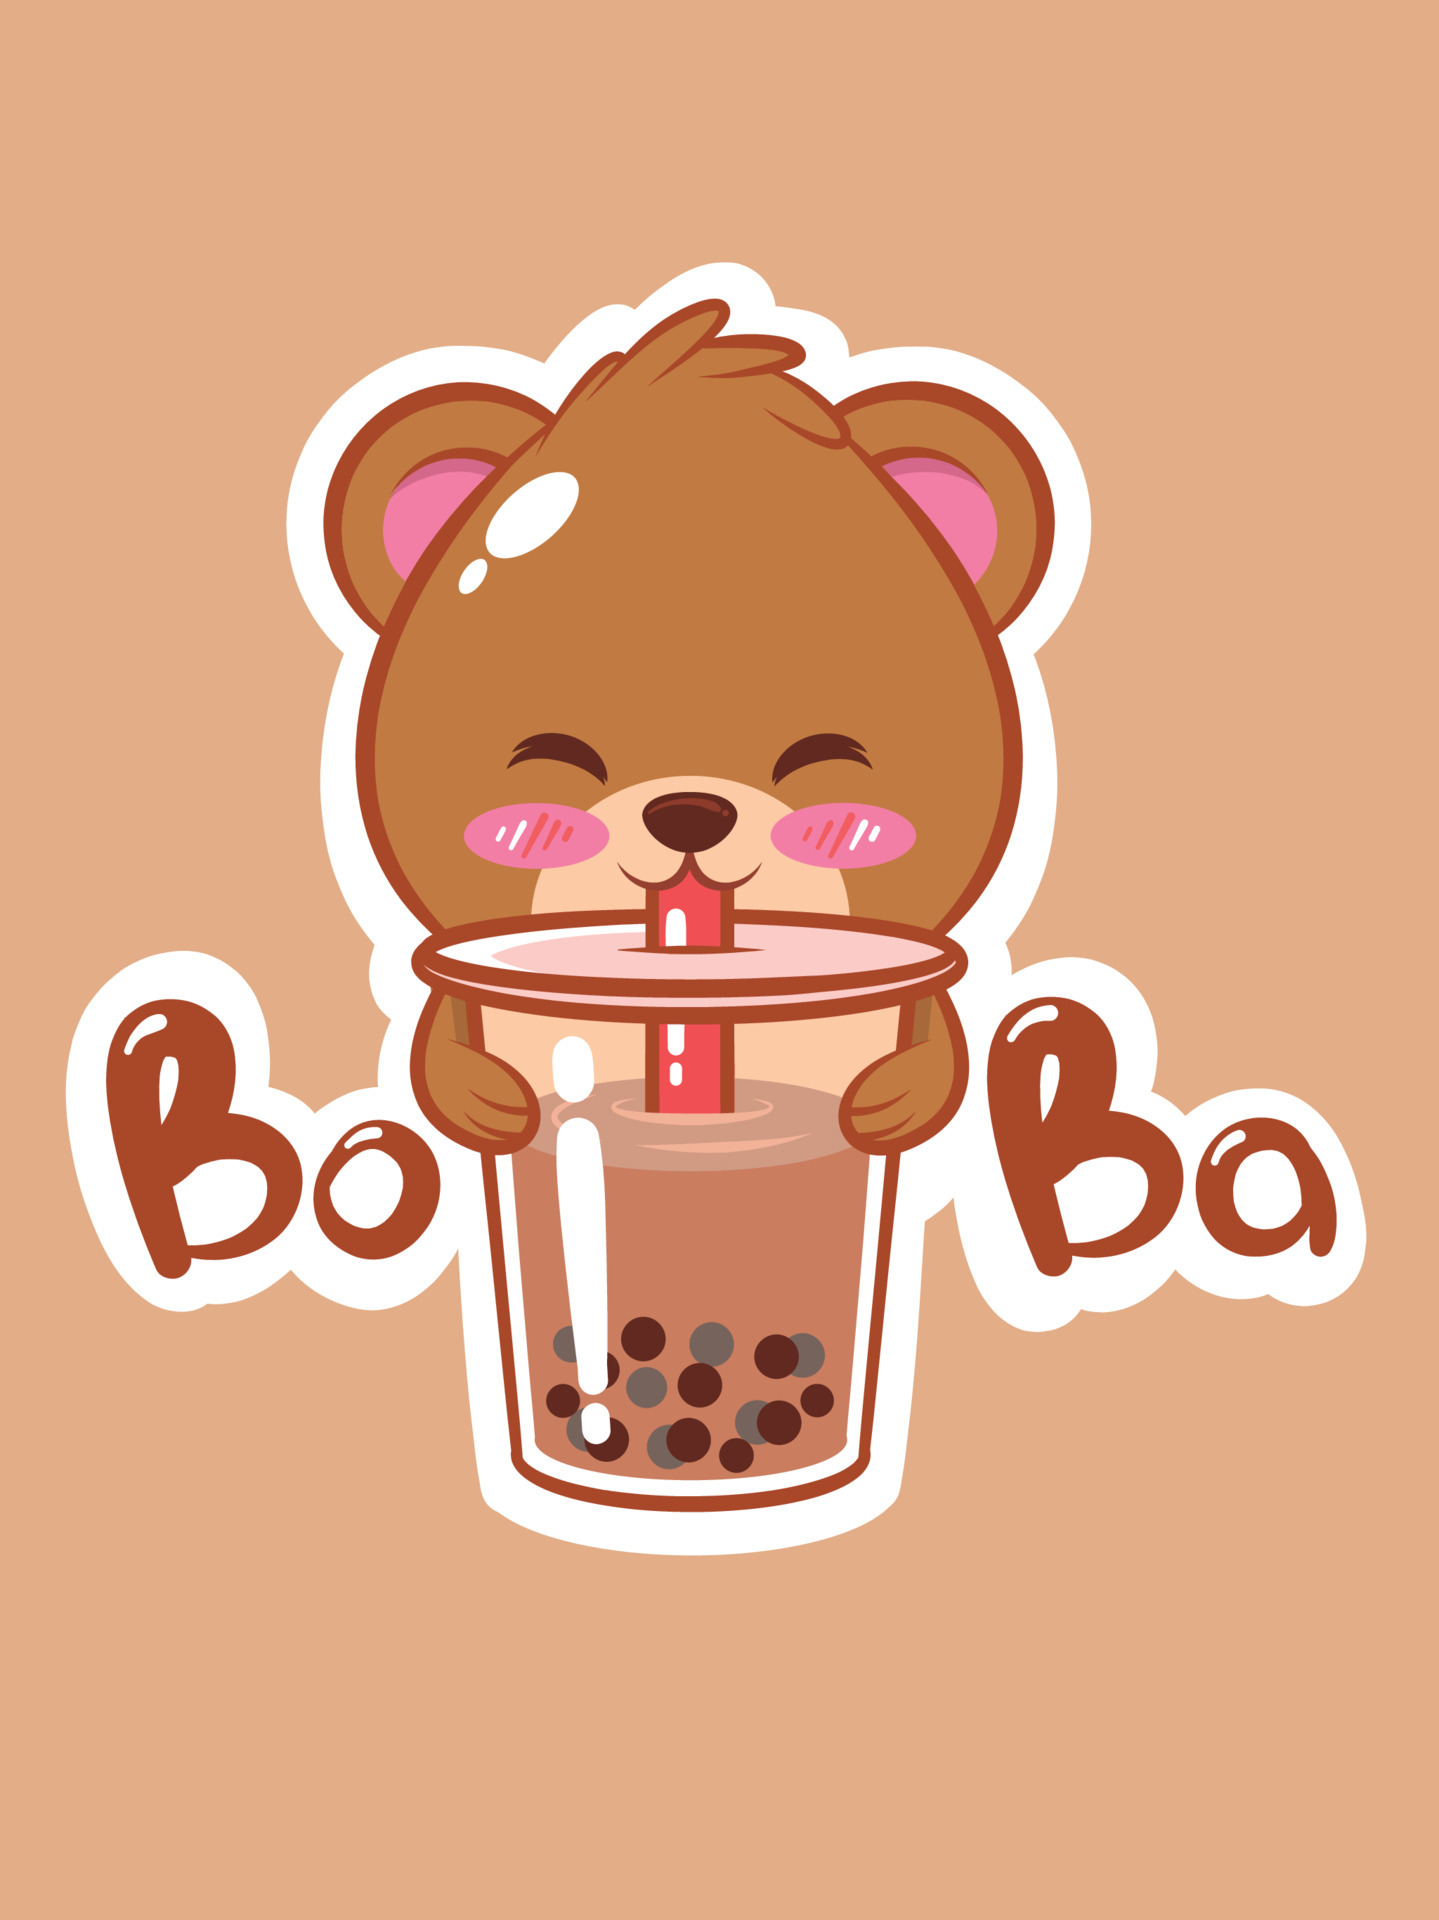 a cute bear drinking boba tea. cartoon character and mascot illustration concept